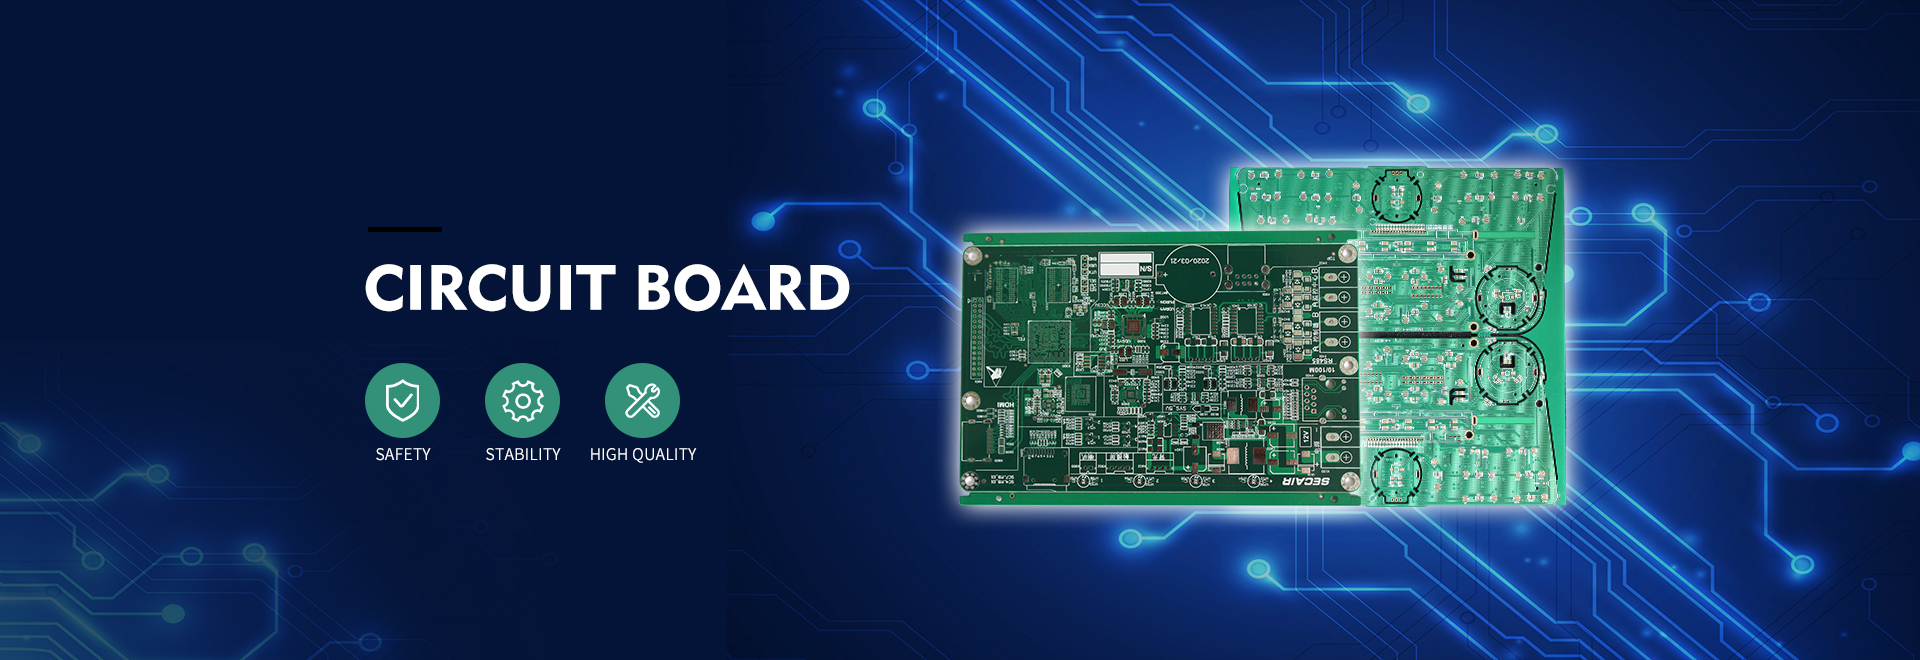 Circuit boards, PCB circuit boards, circuit board manufacturers